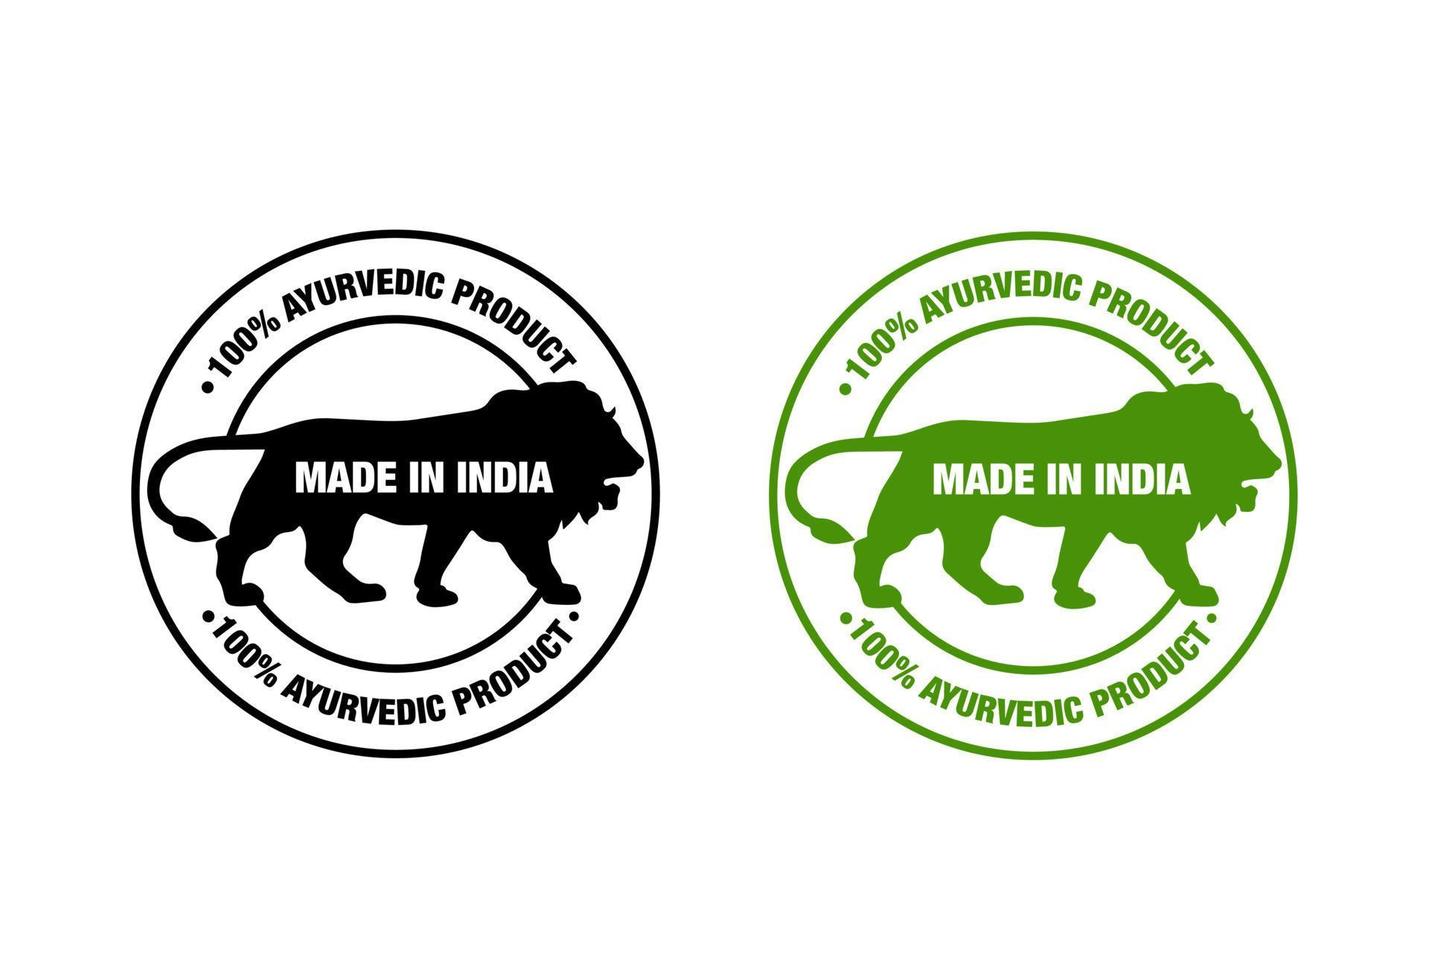 100 produtos ayurvédicos com vetor de carimbo feito na Índia.